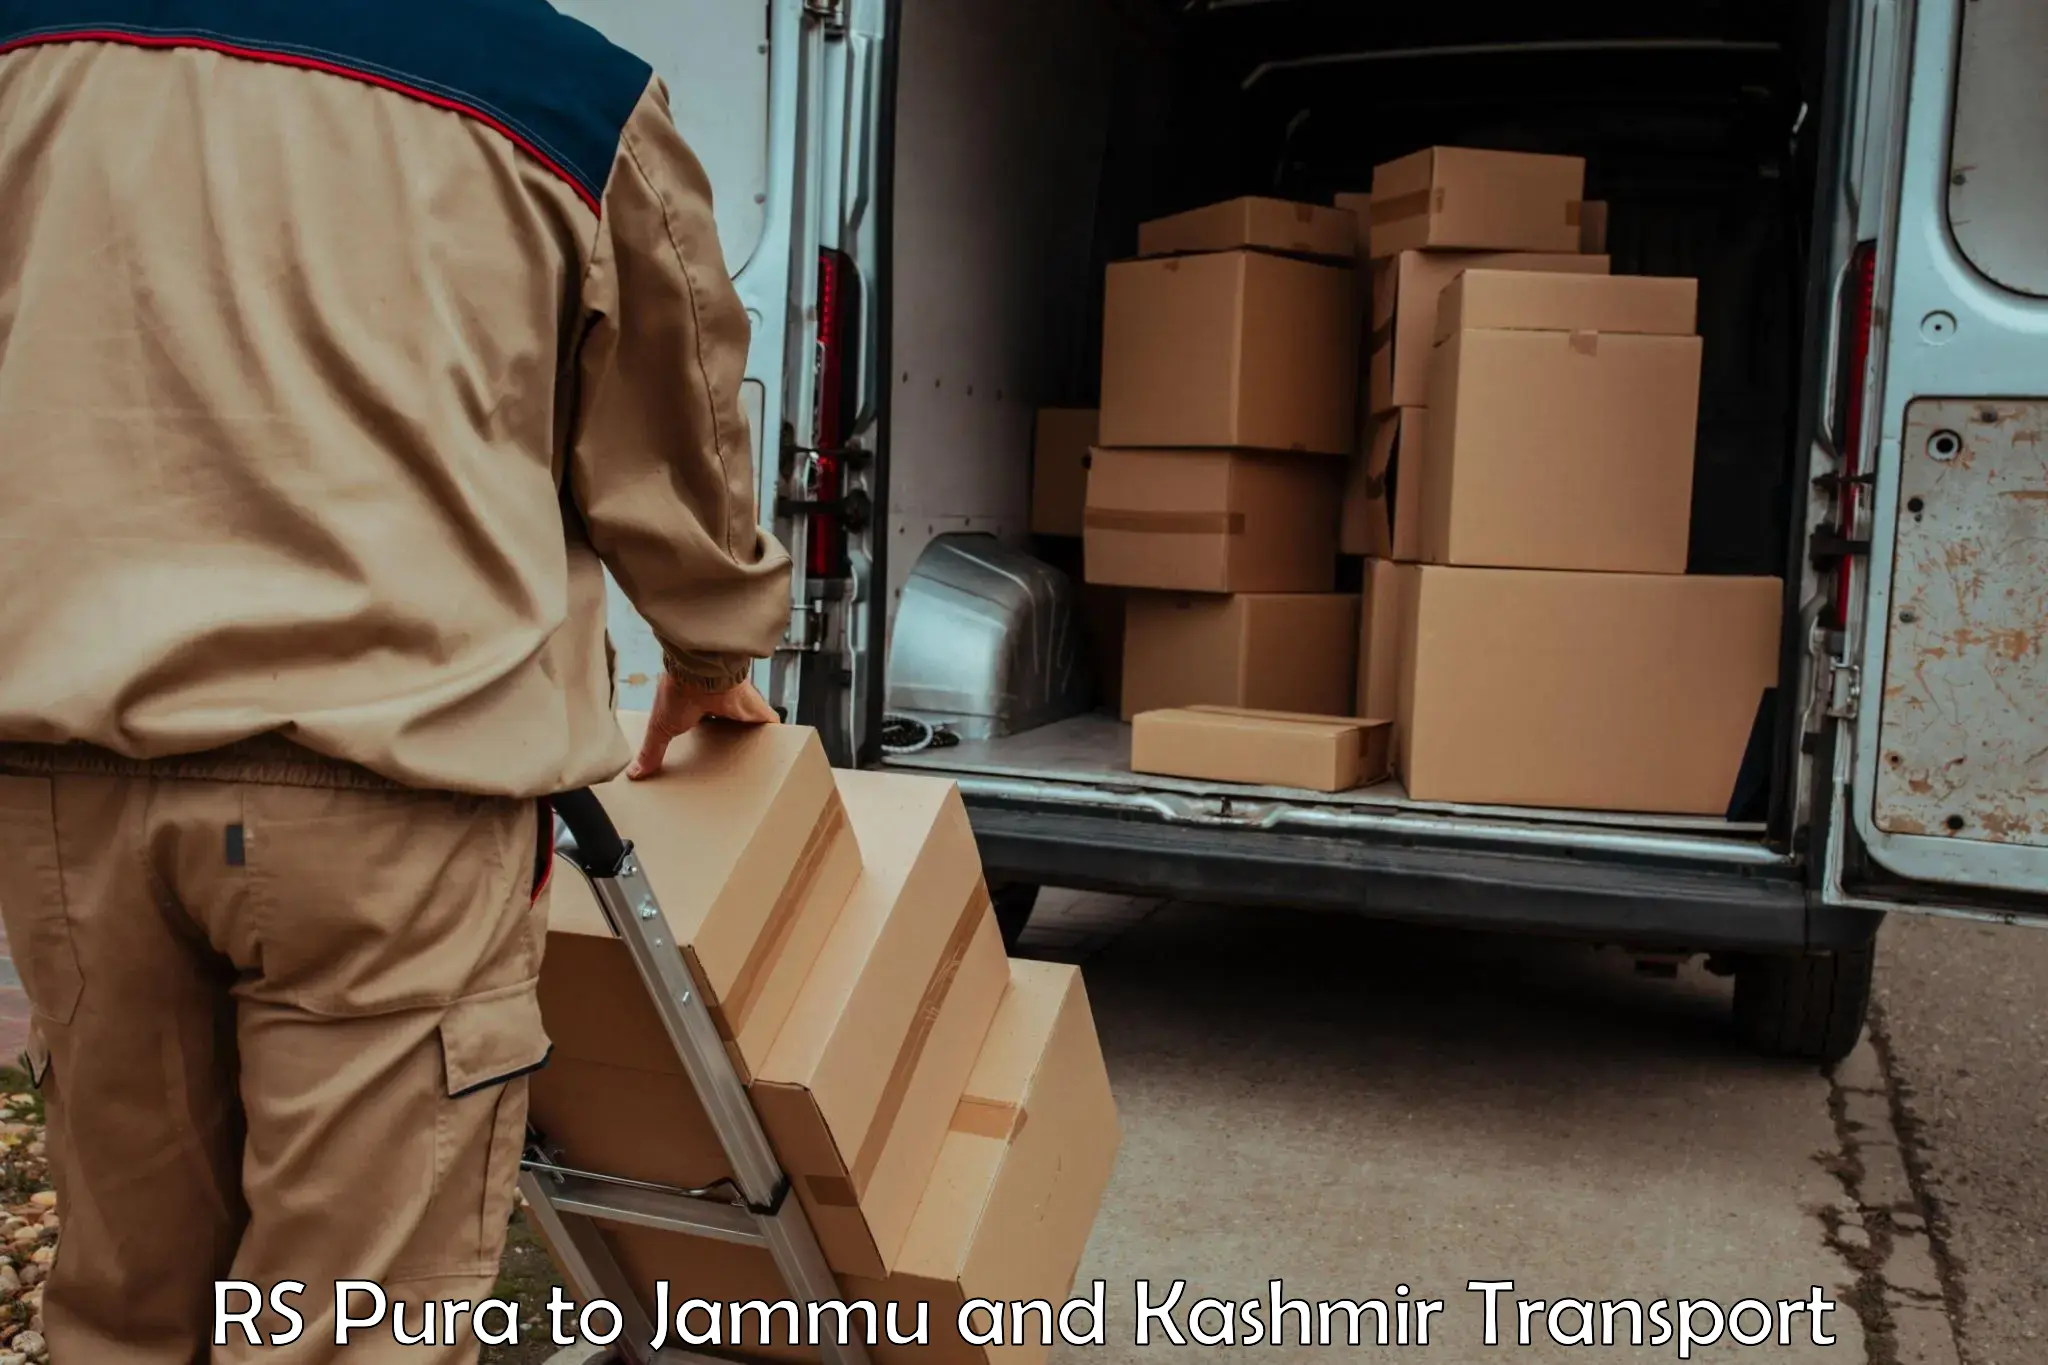 Furniture transport service RS Pura to Jammu and Kashmir